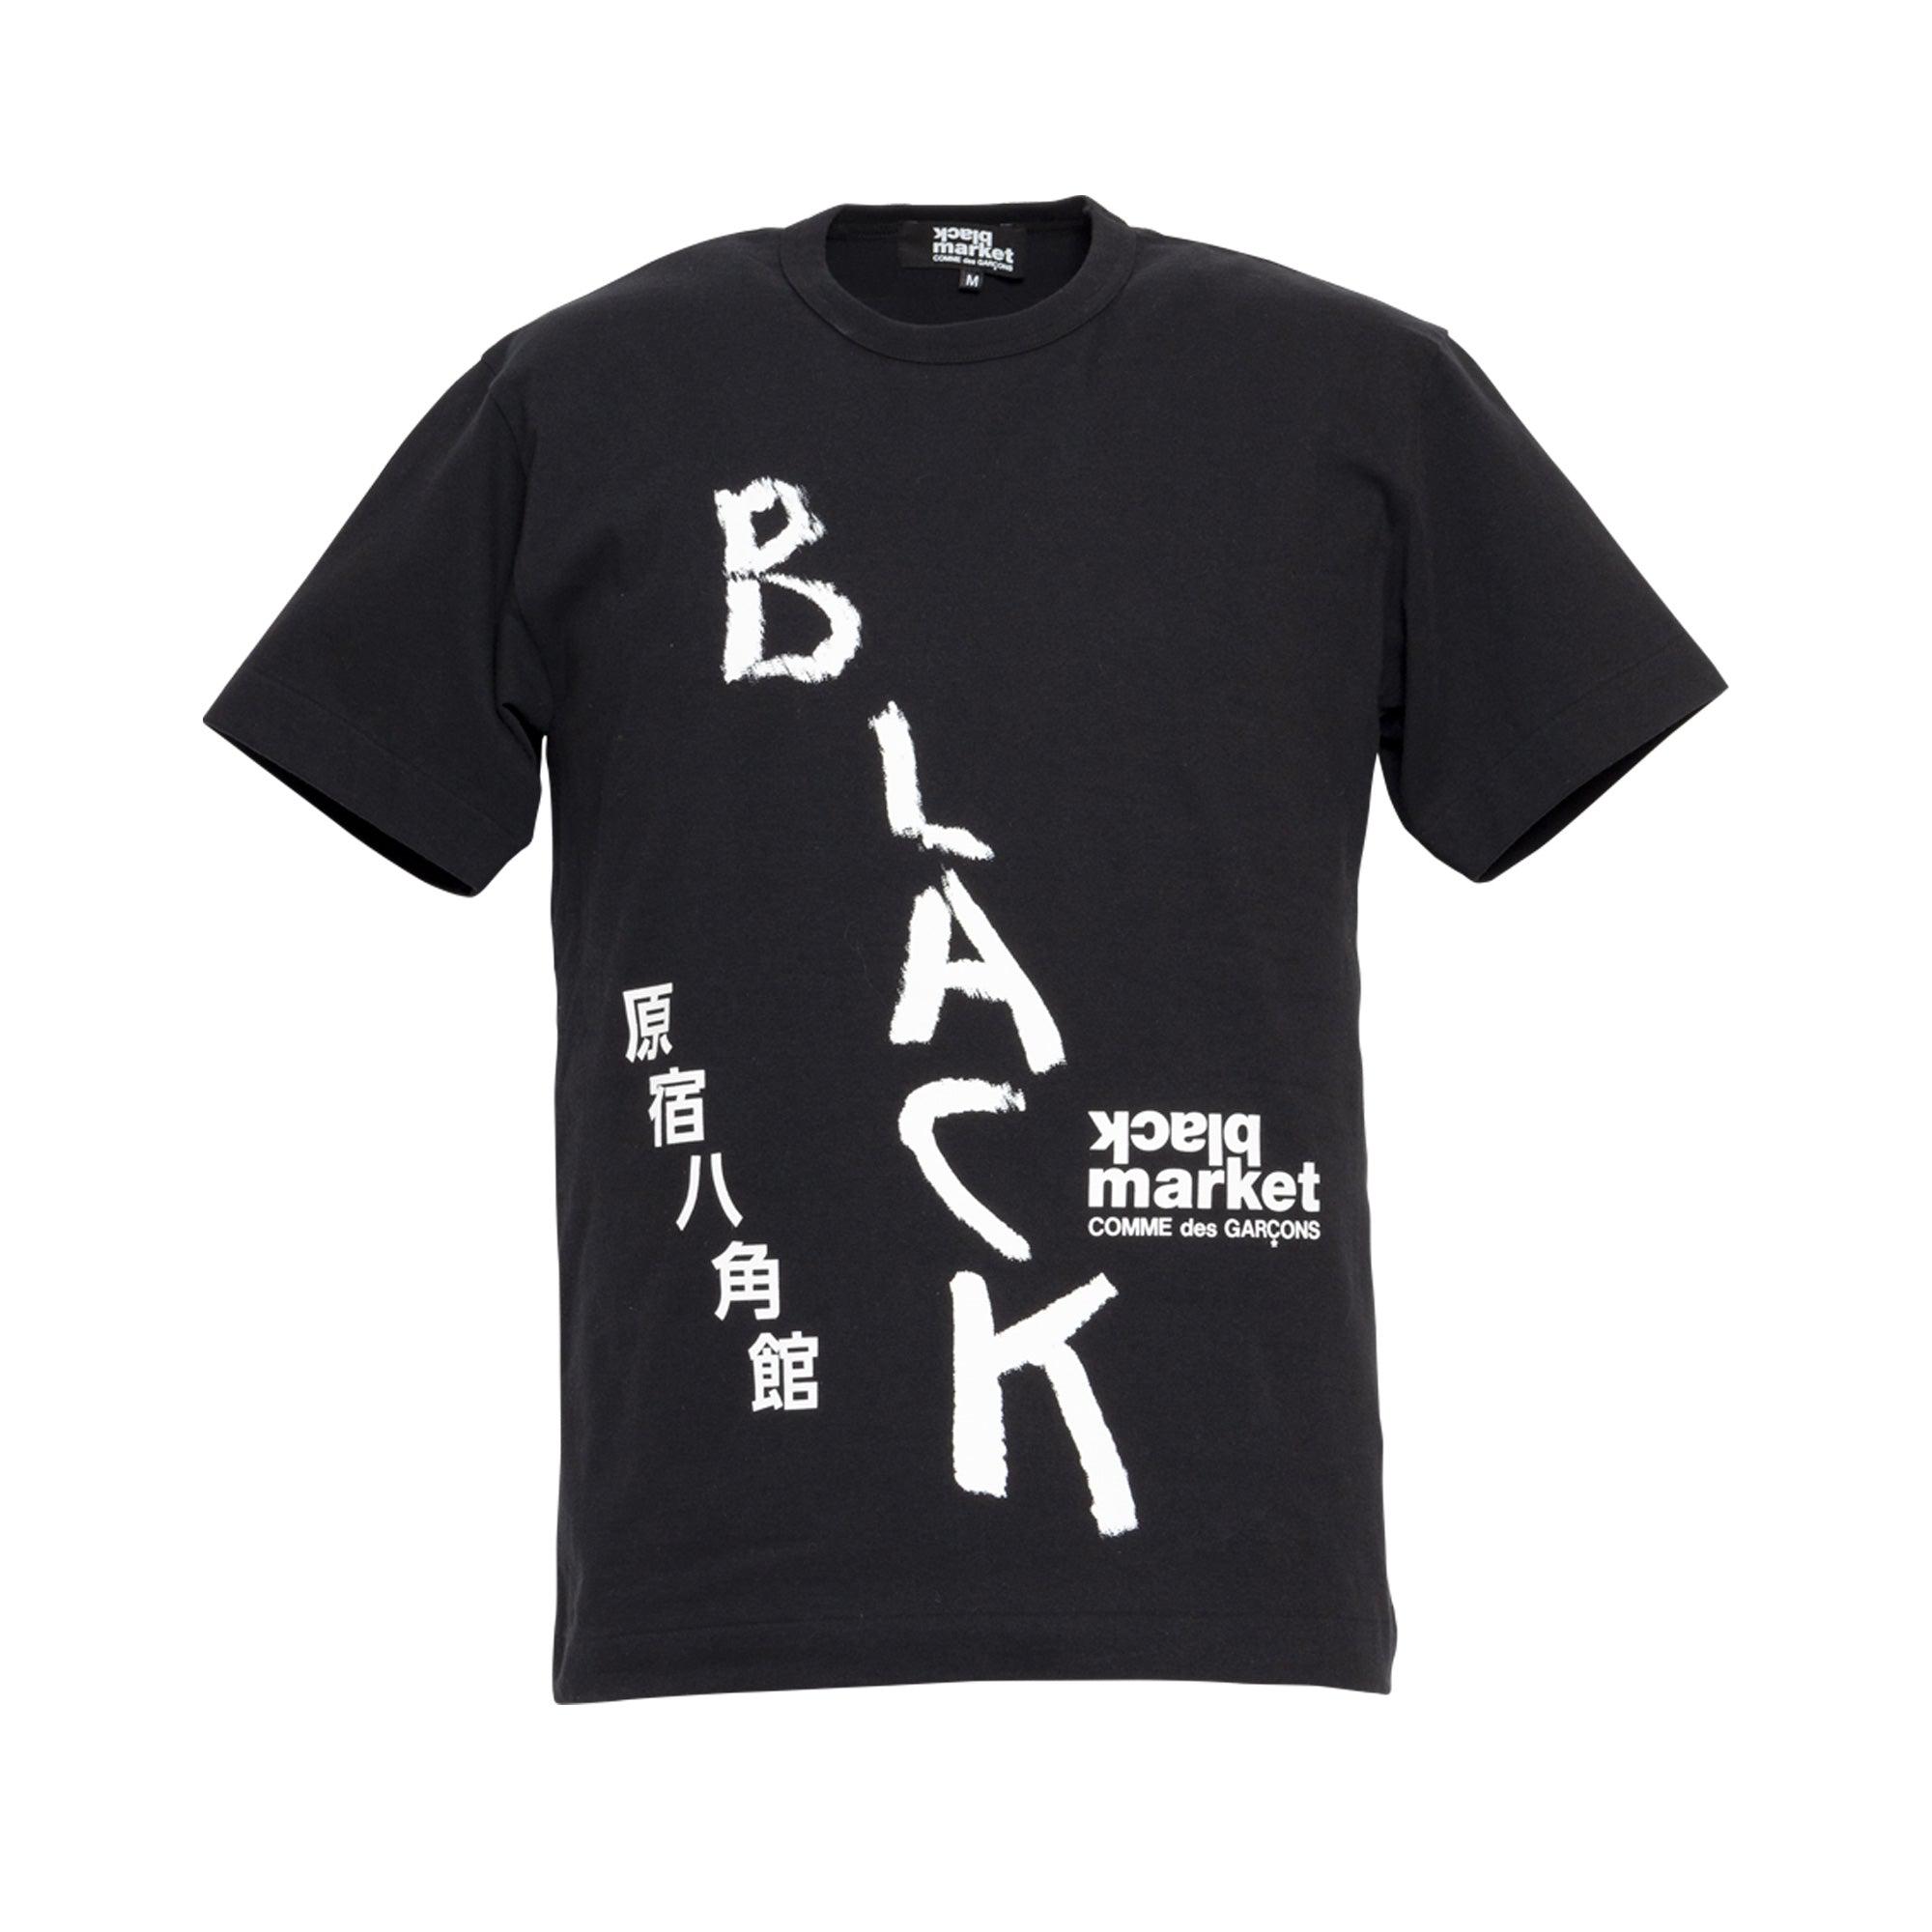 Comme des Garçons Black Market Print T-Shirt (Black) by CDG SPECIAL PROJECTS